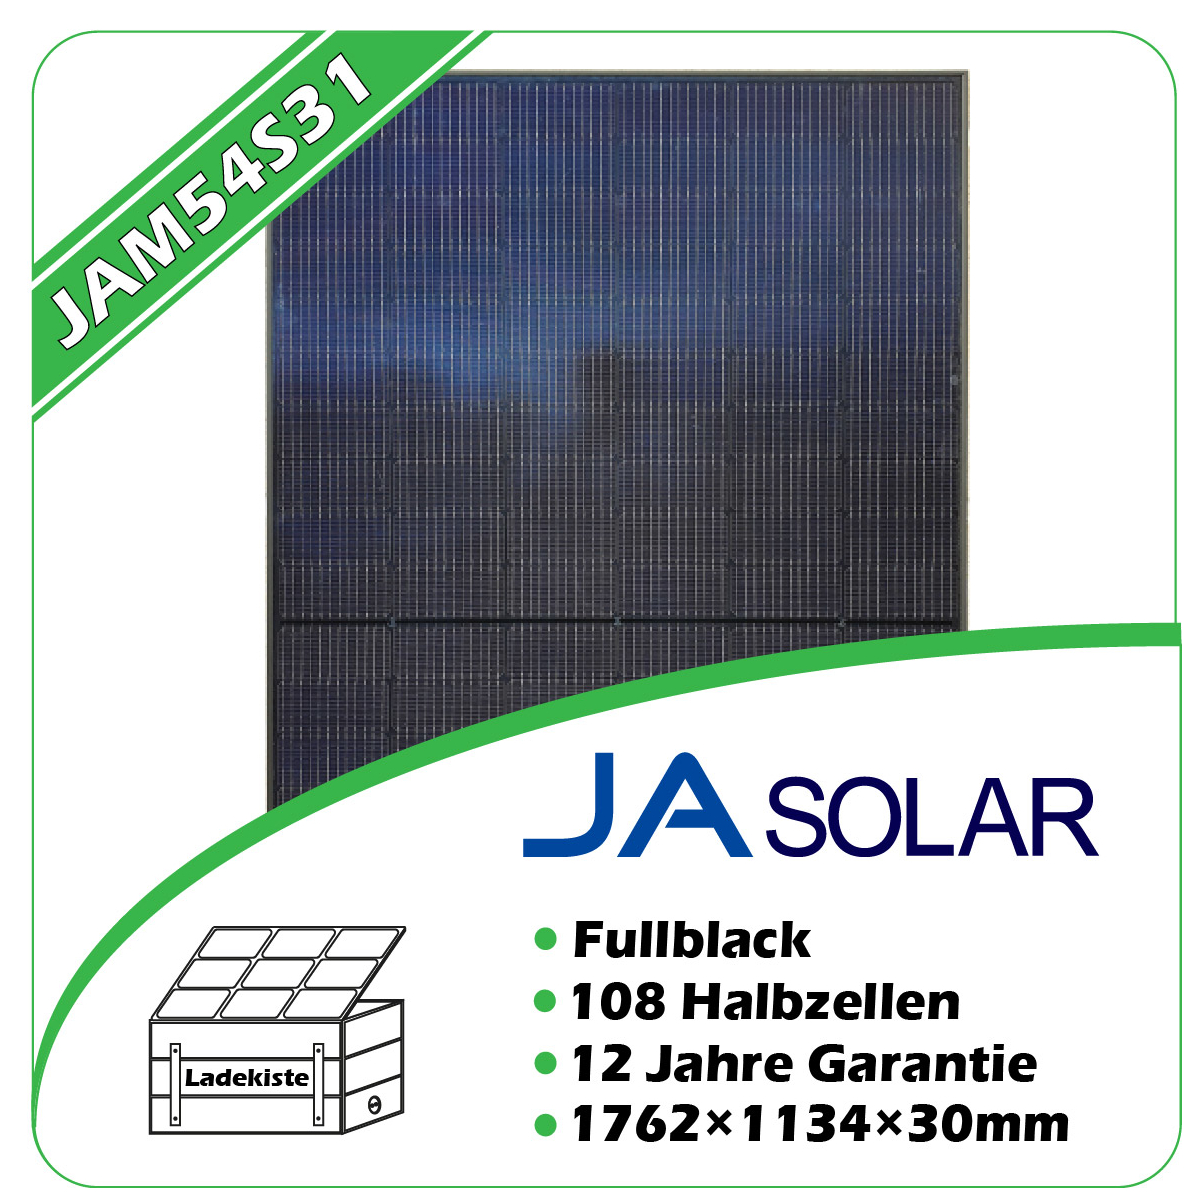 Ja Solar 415Wp Halbzellenmodul Black Frame JAM54S30-415/GR 1722 x 1134 x 30 mm